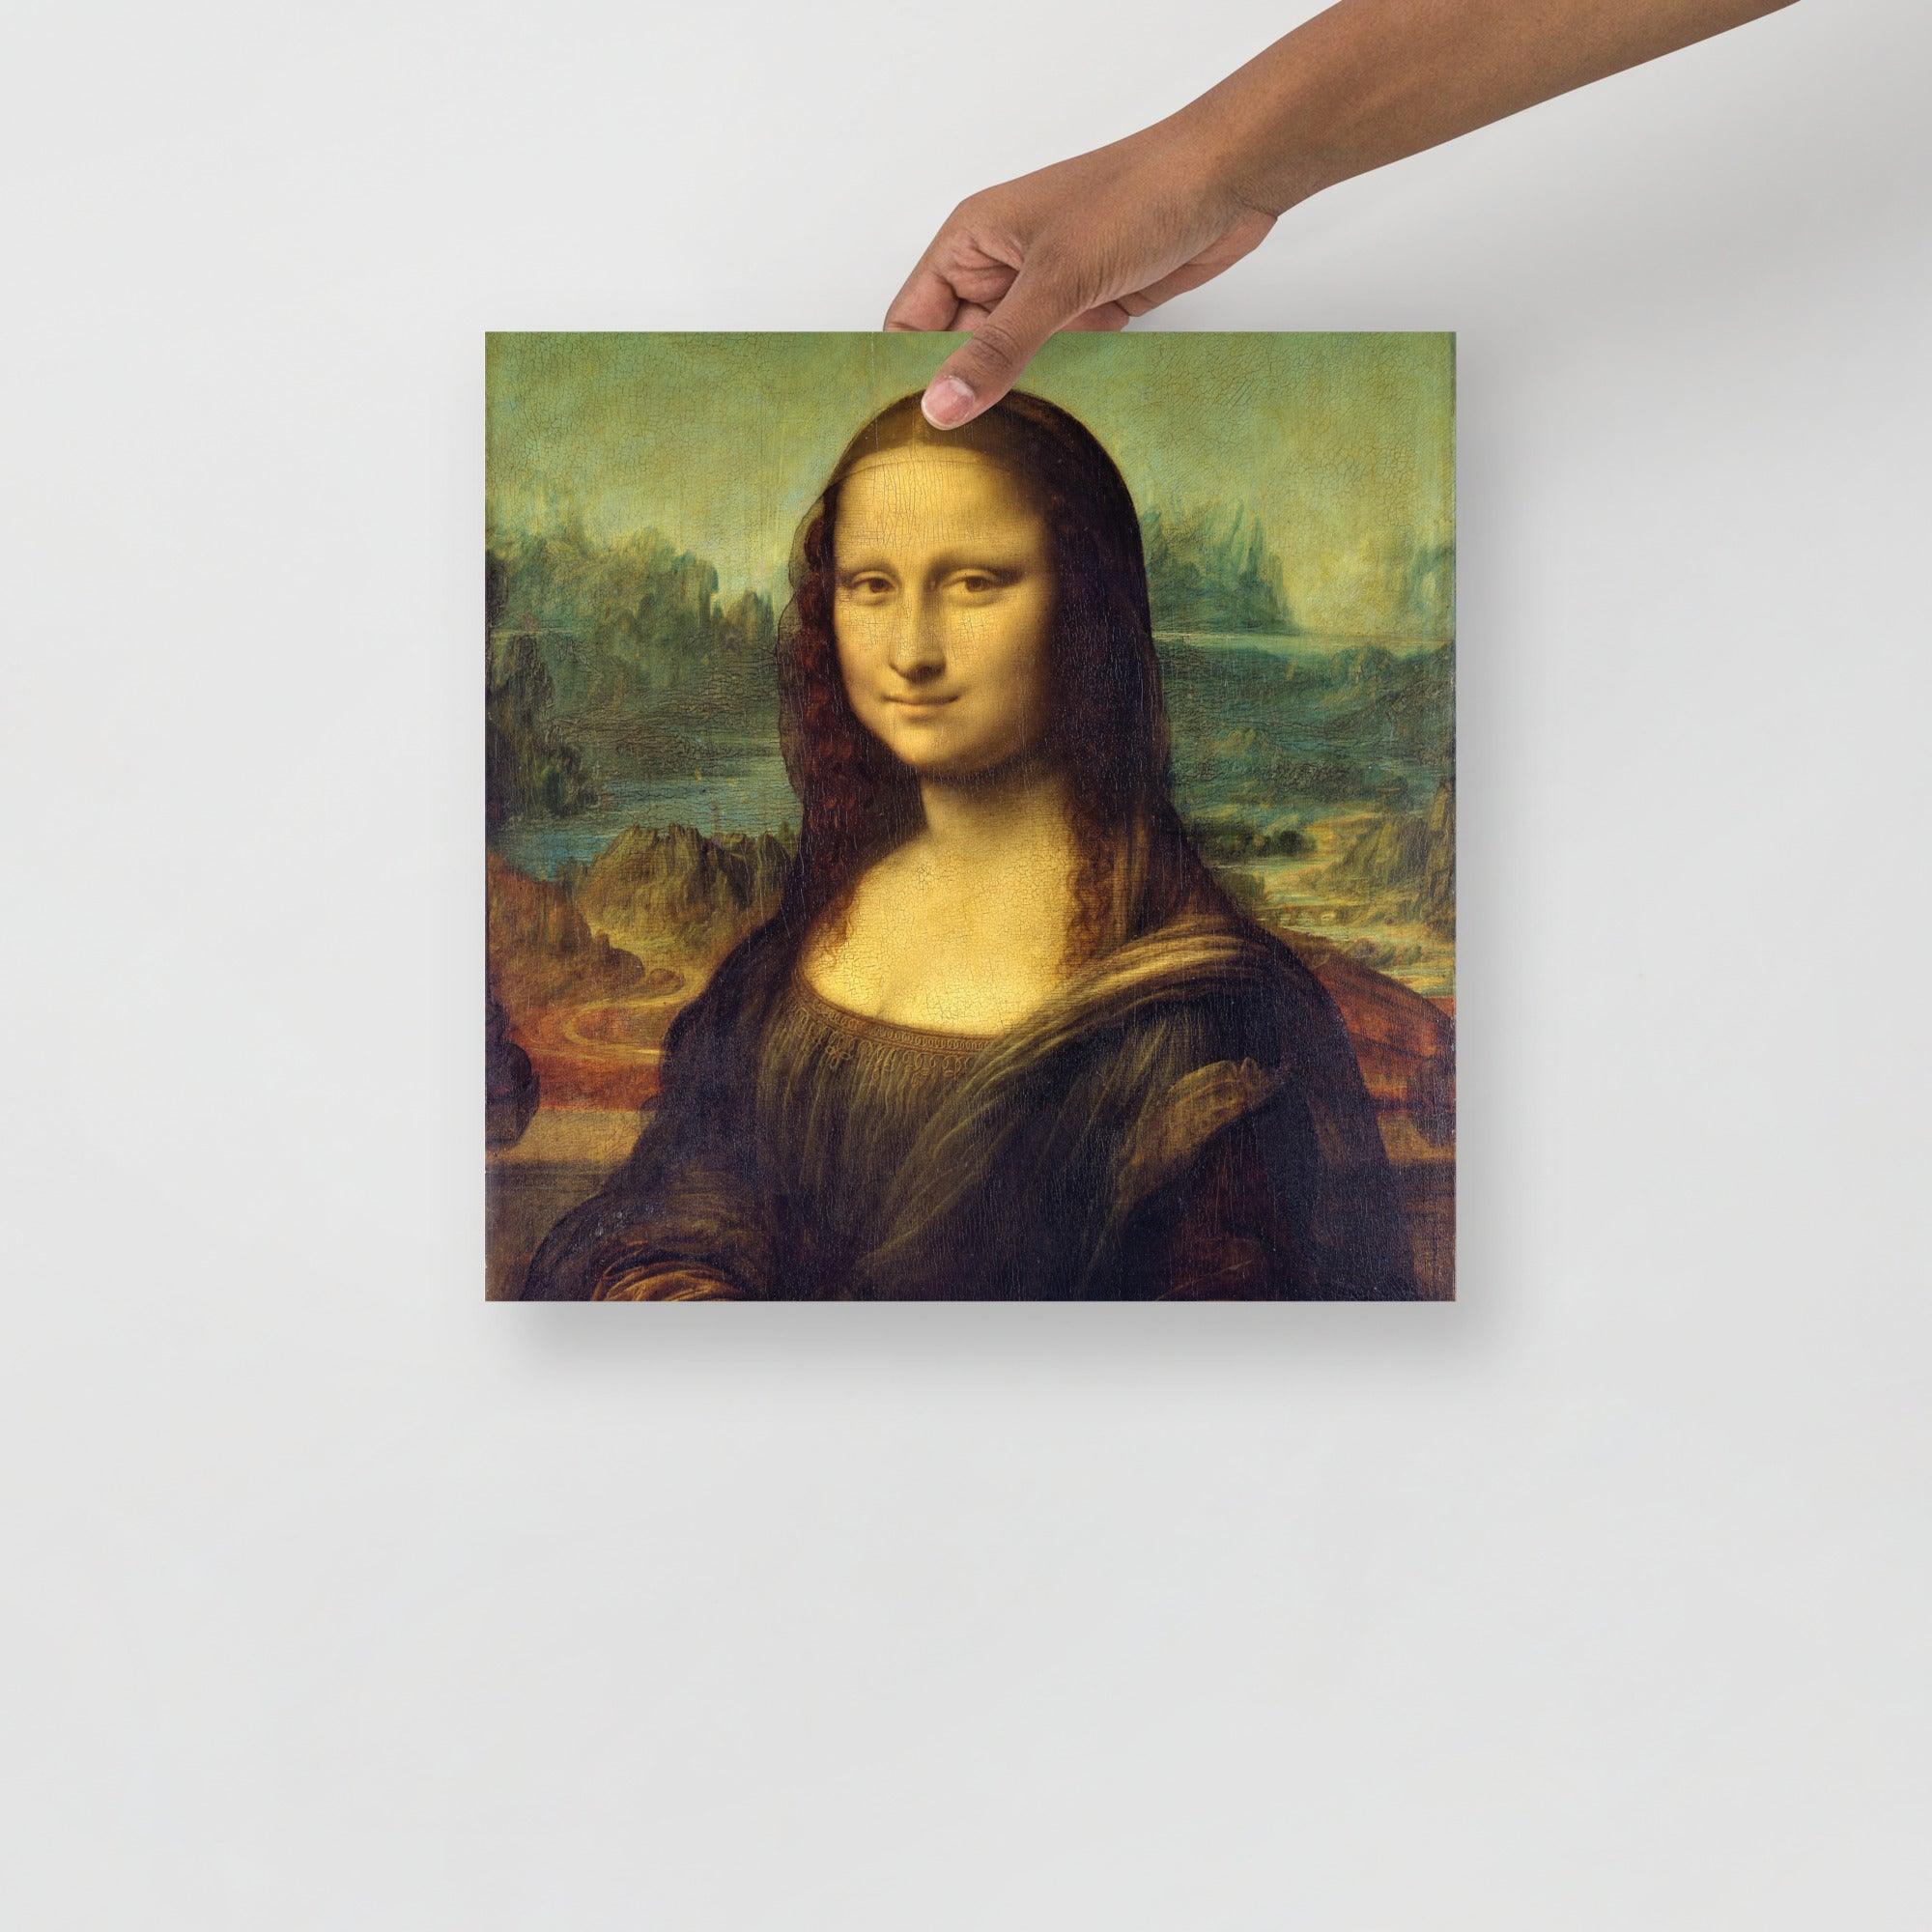 A Mona Lisa by Leonardo Da Vinci poster on a plain backdrop in size 14x14”.